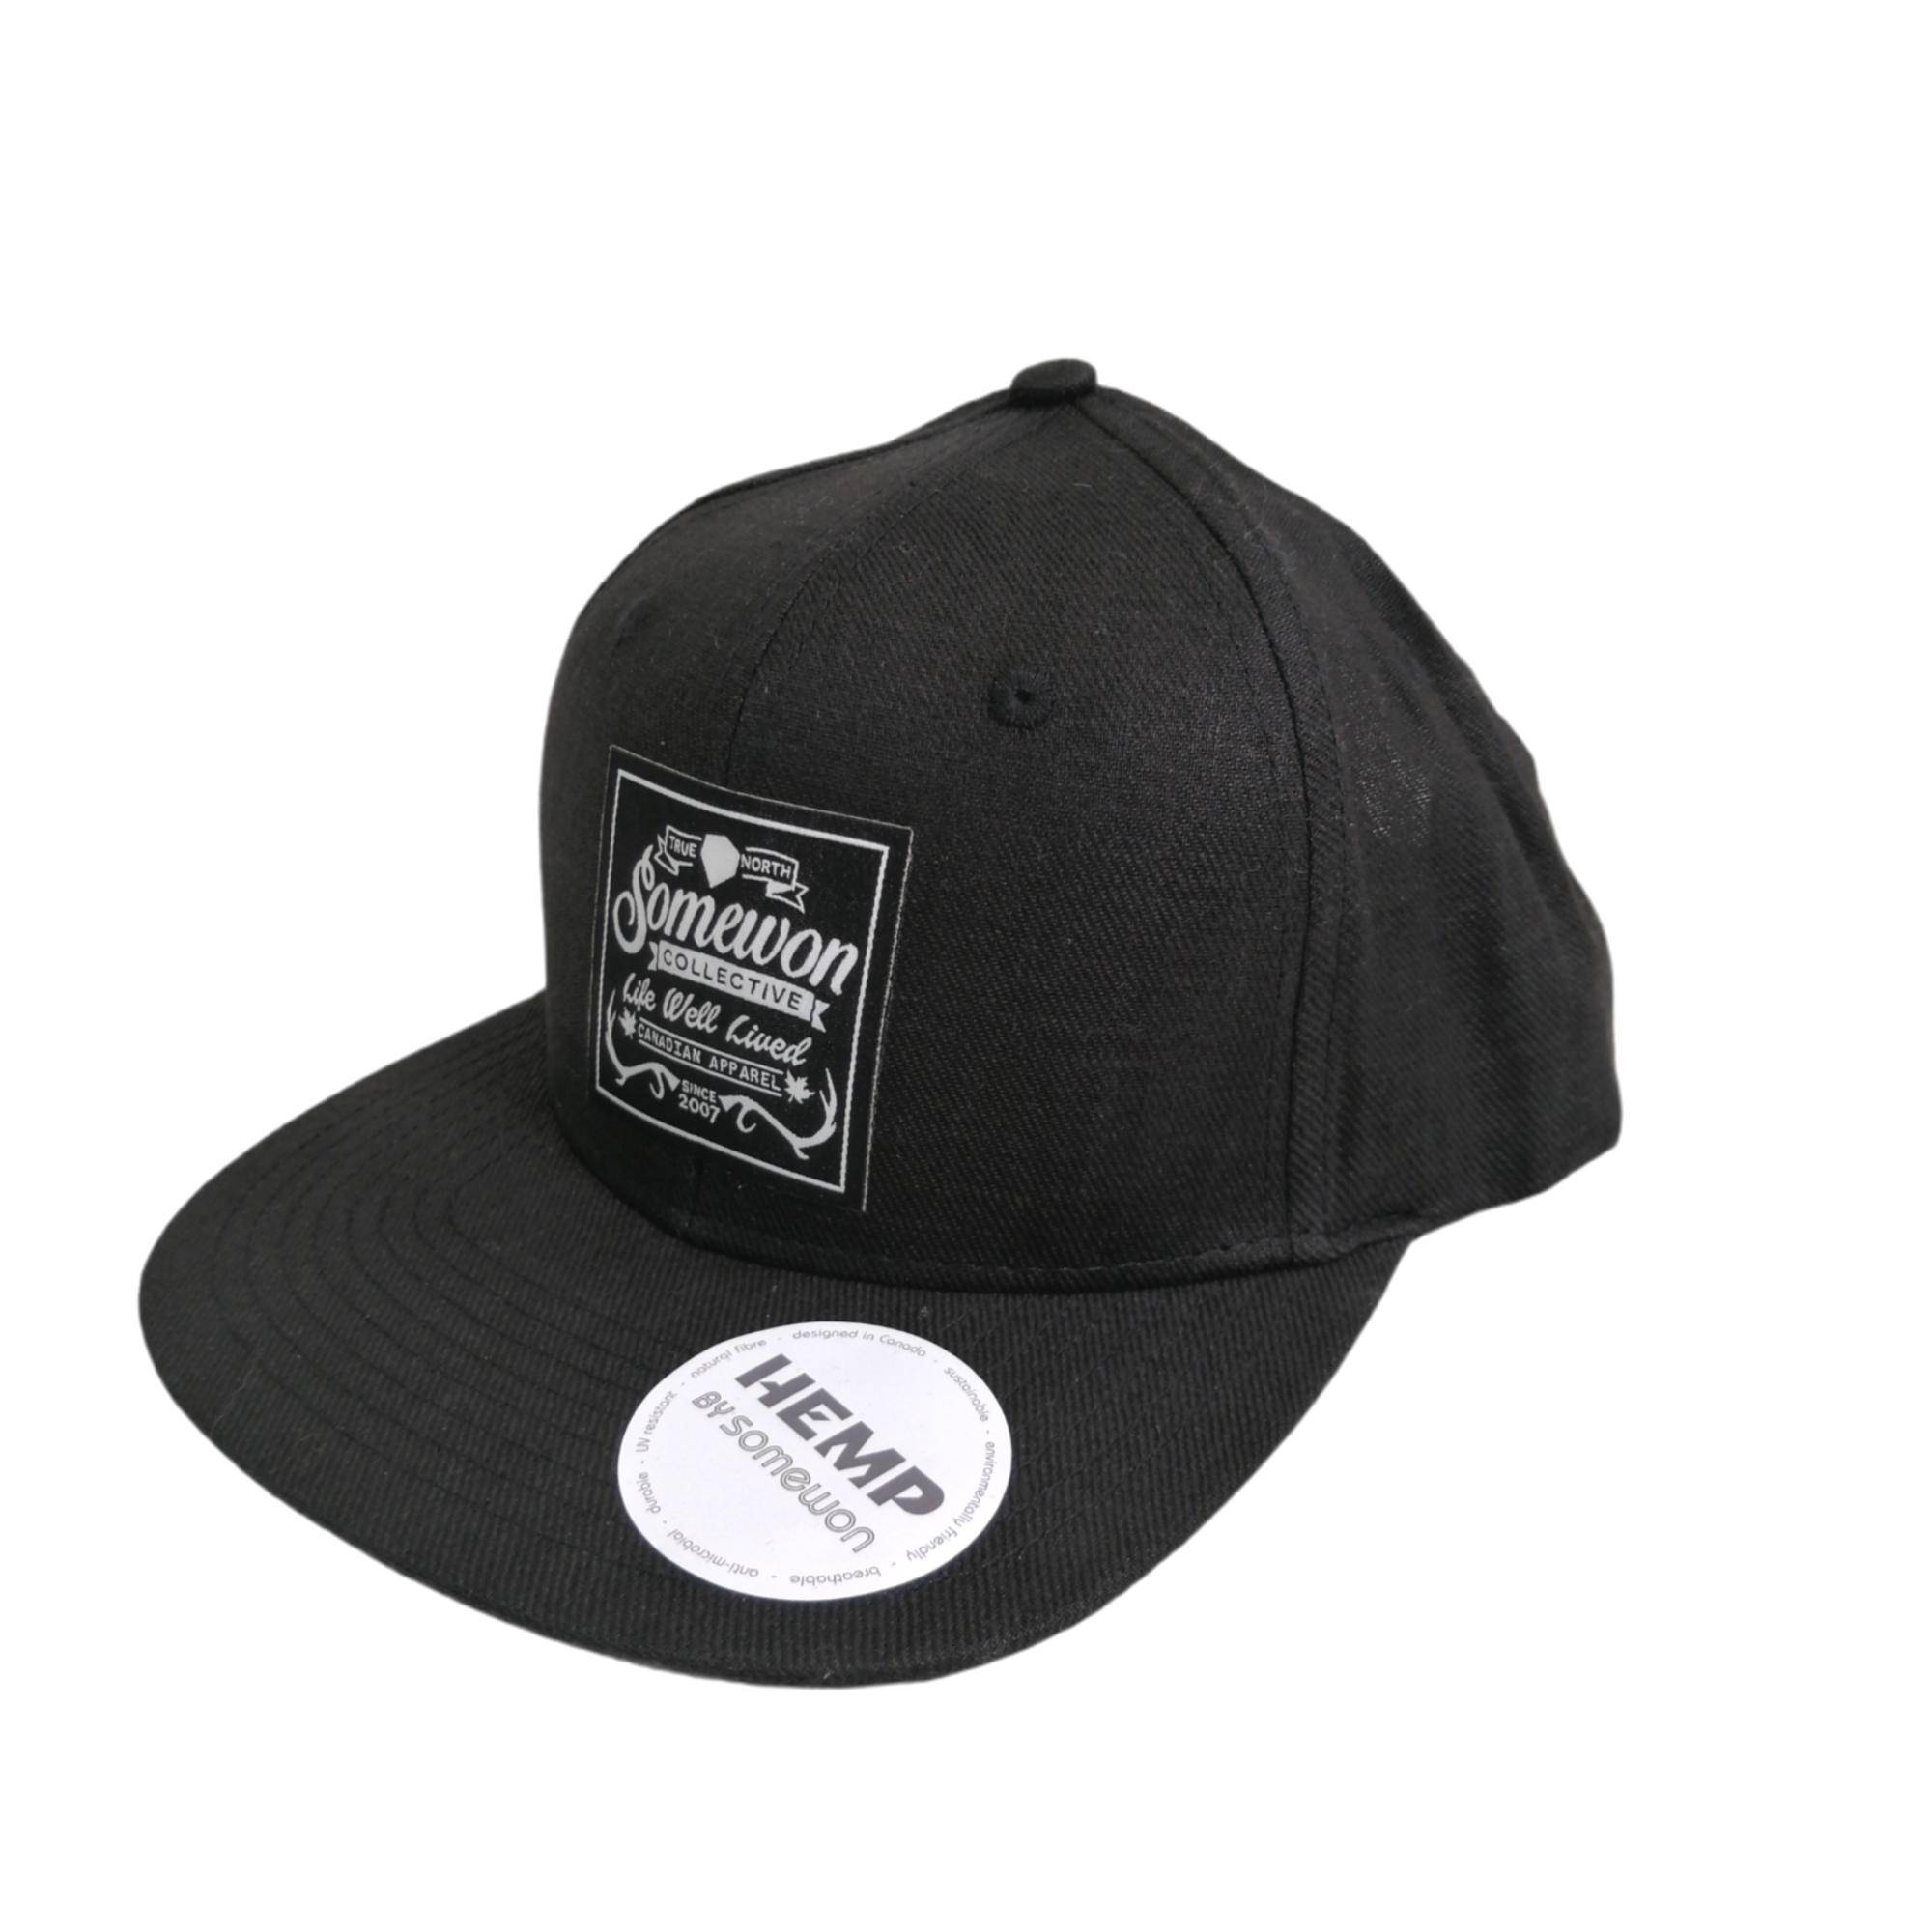 TRUE NORTH HEMP HAT, BLACK – Somewon